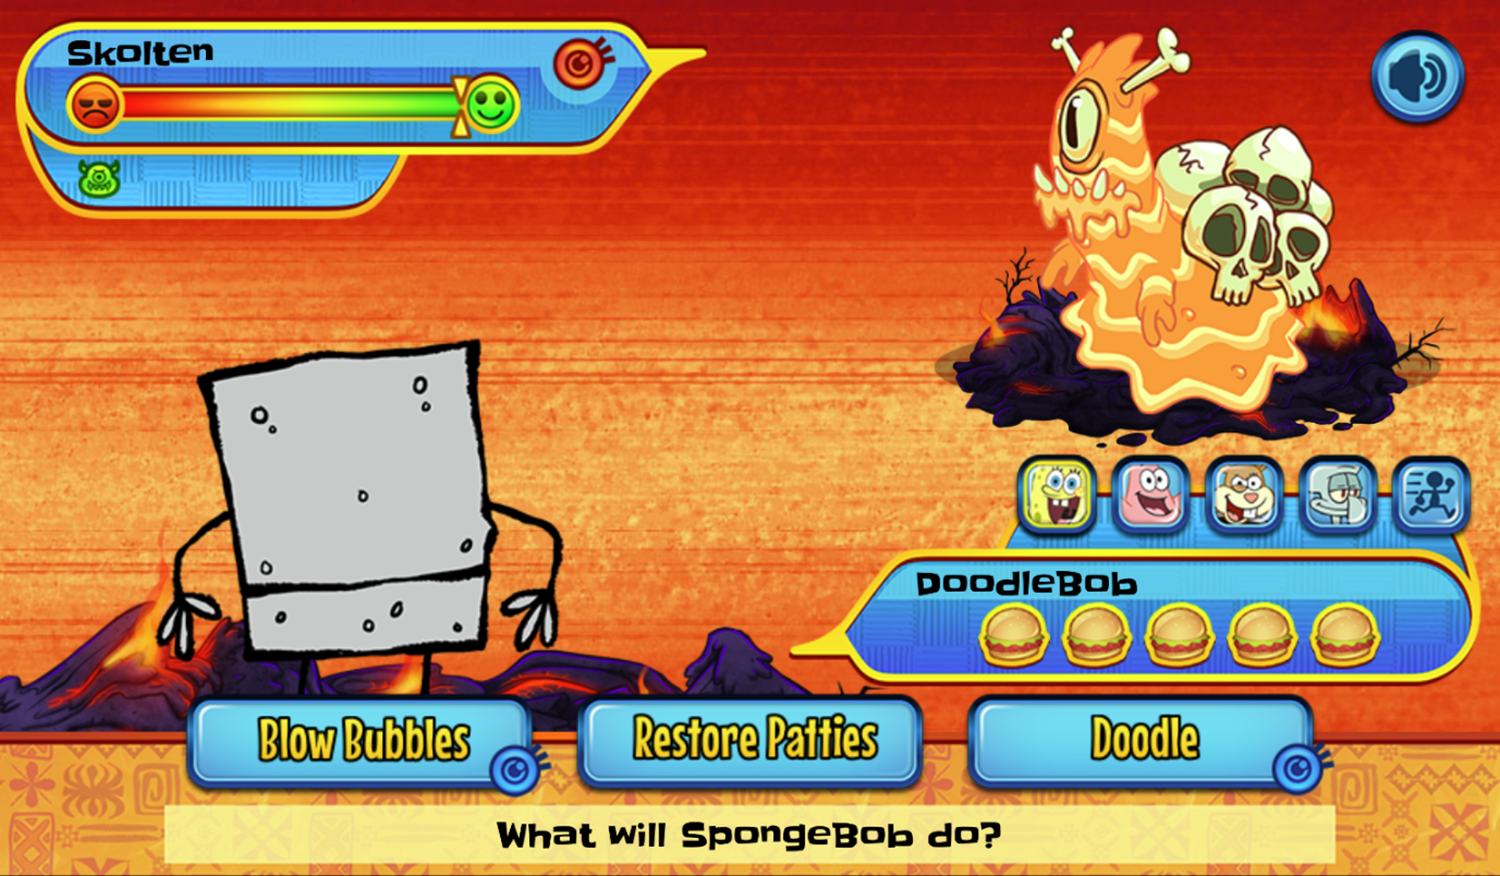 SpongeBob SquarePants Monster Island Adventure Game Final Boss Battle Screenshot.